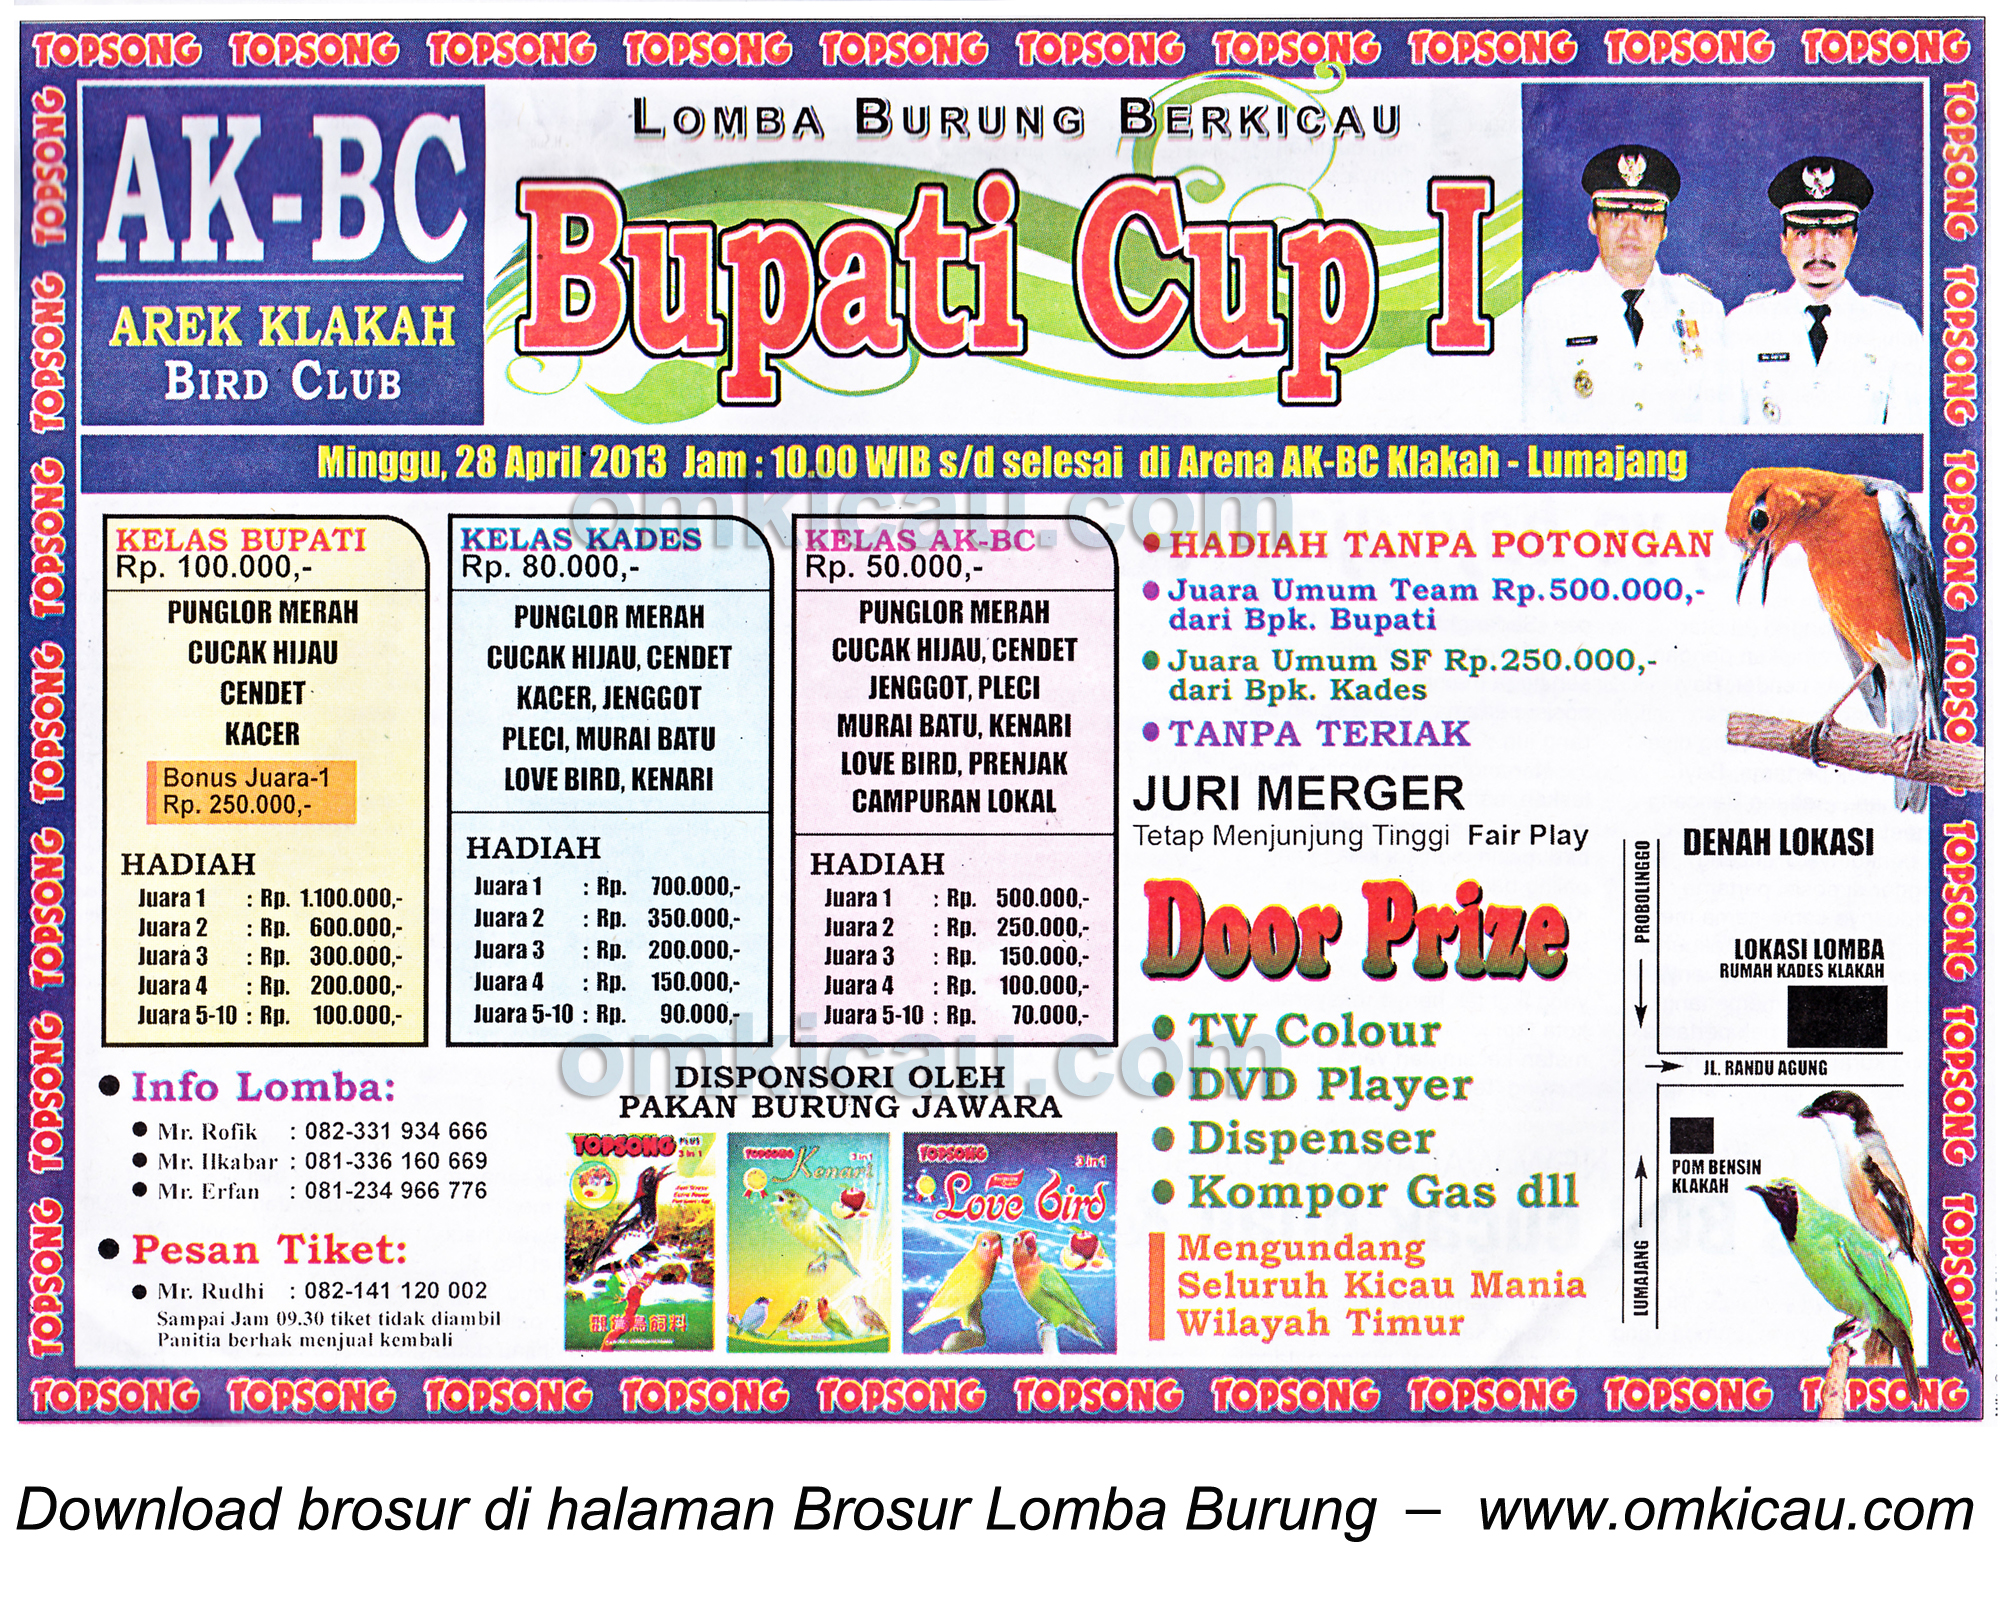 Brosur Lomba Burung Bupati Cup I, Lumajang, 28 April 2013